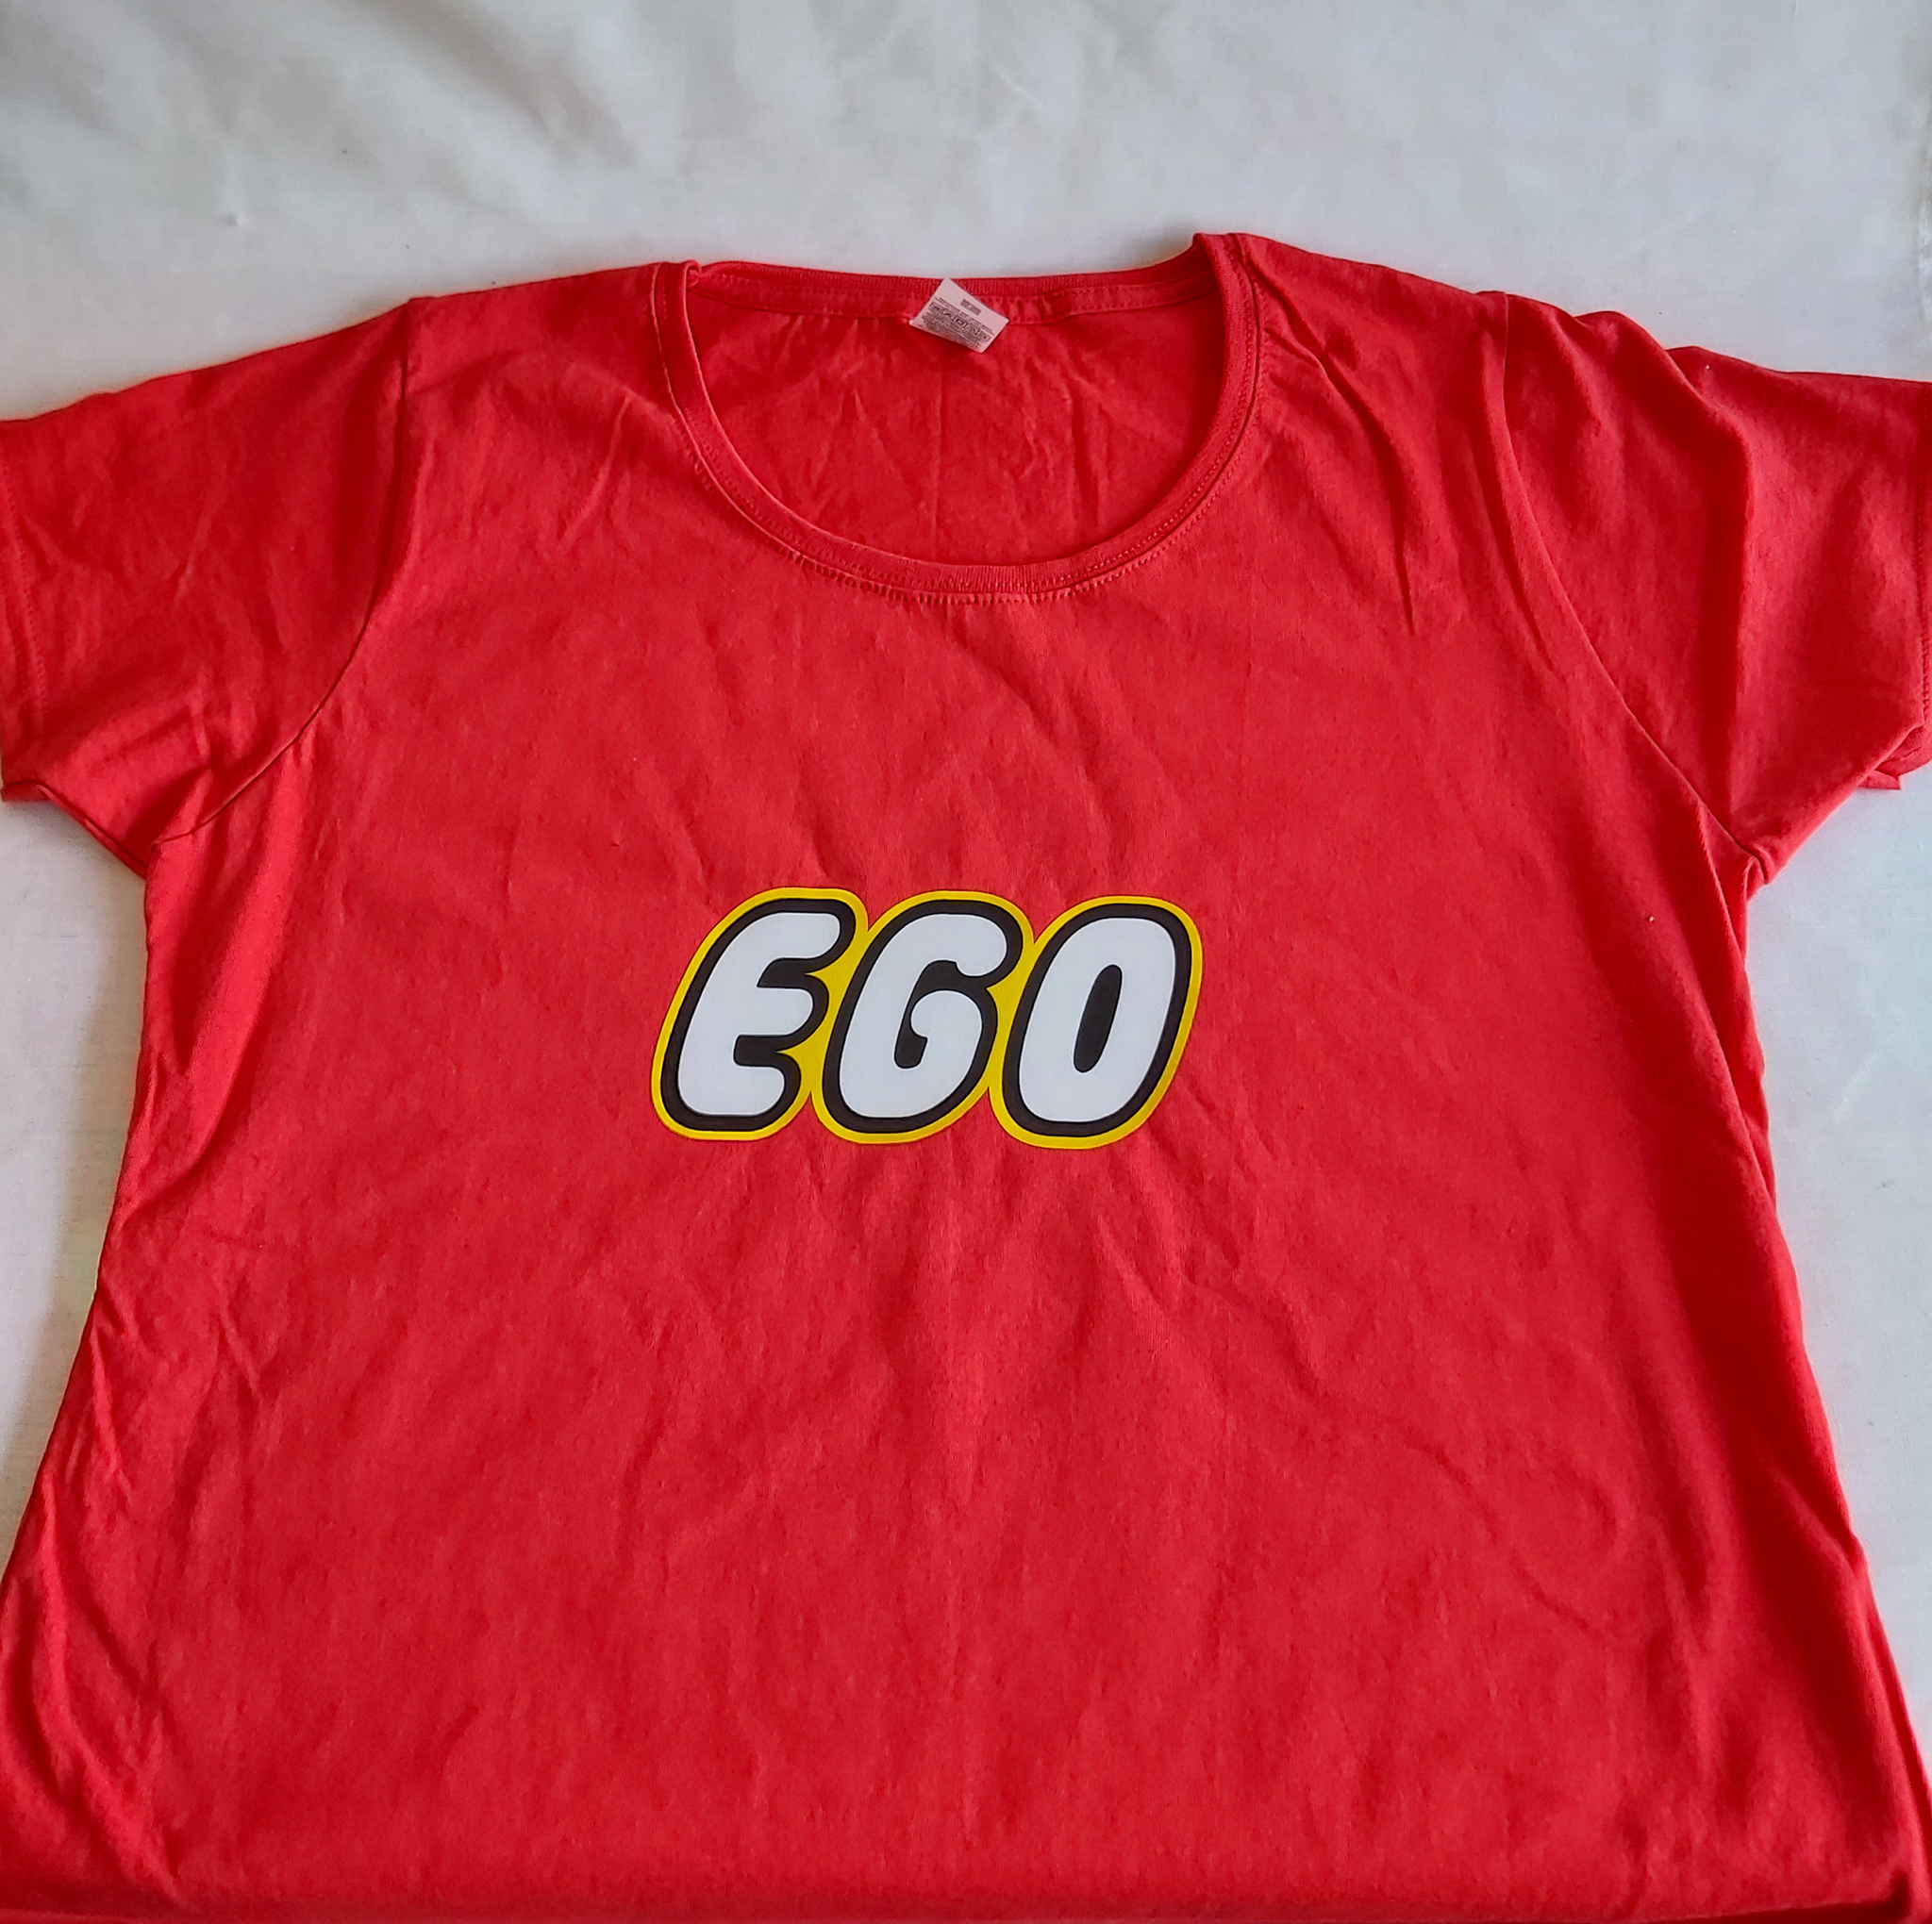 Ego t-shirt